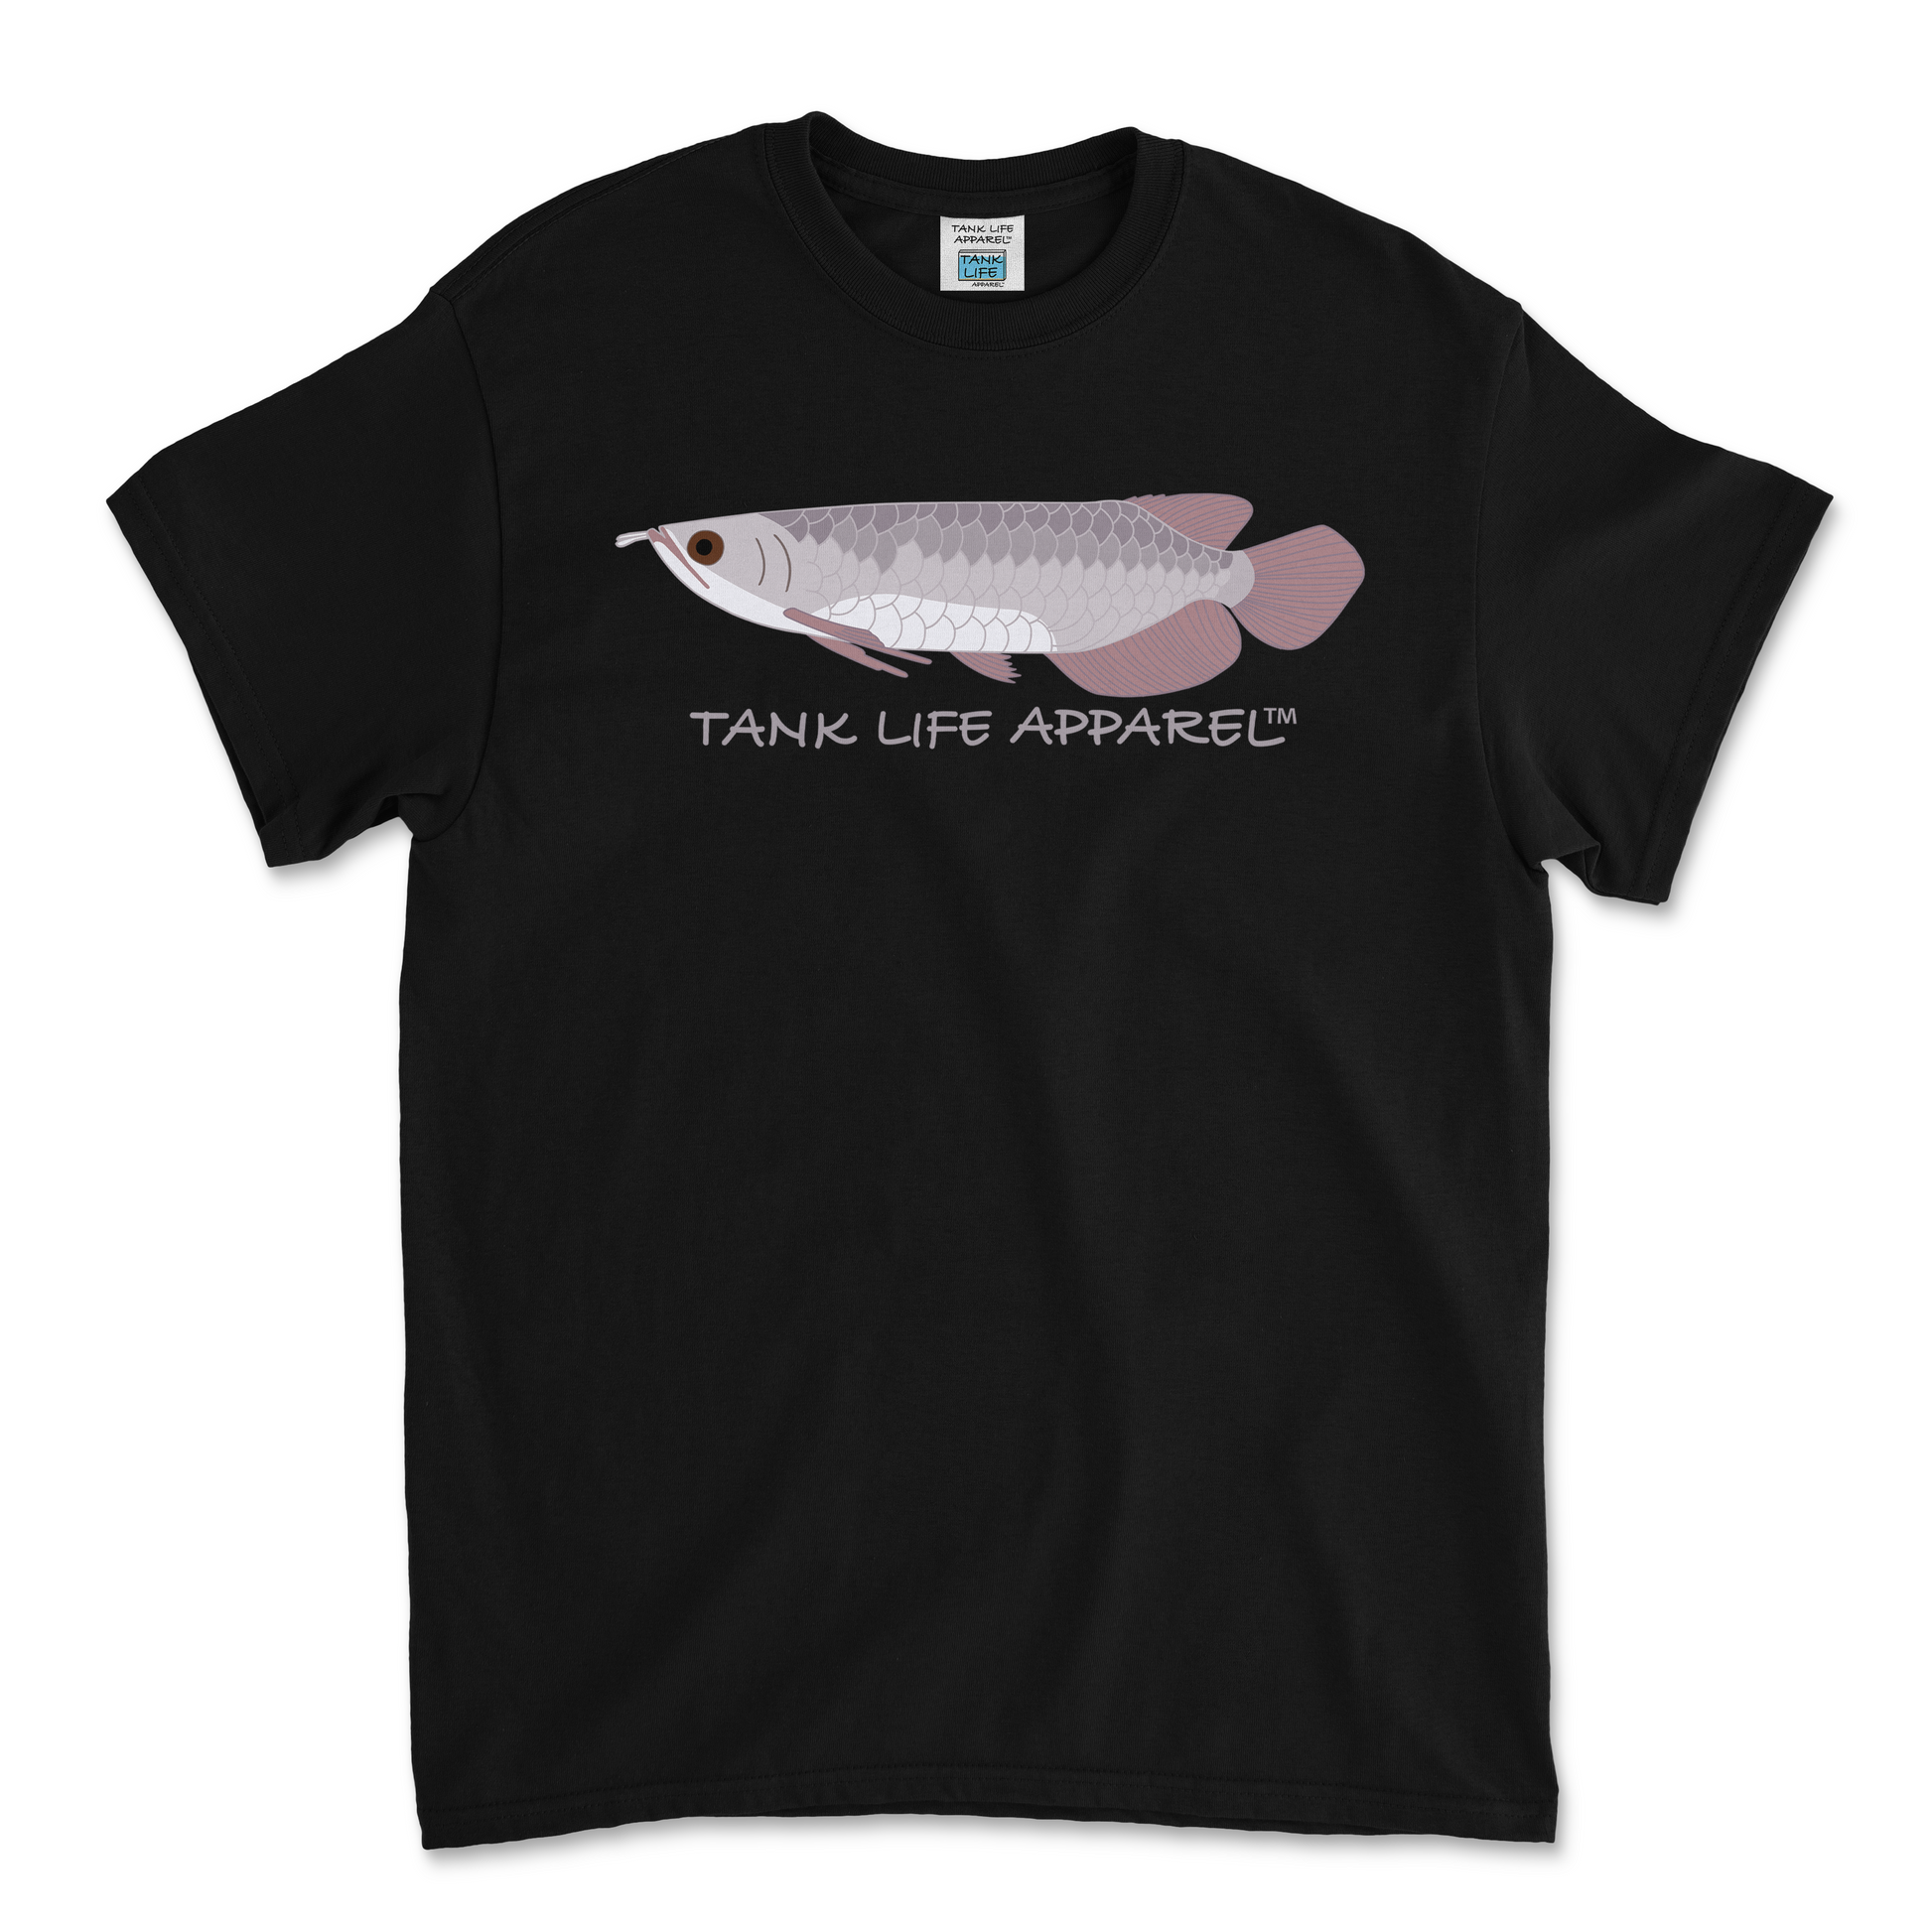 The Tank Life Apparel silver arowana design on a youth tee. Gray monster amazon fish.